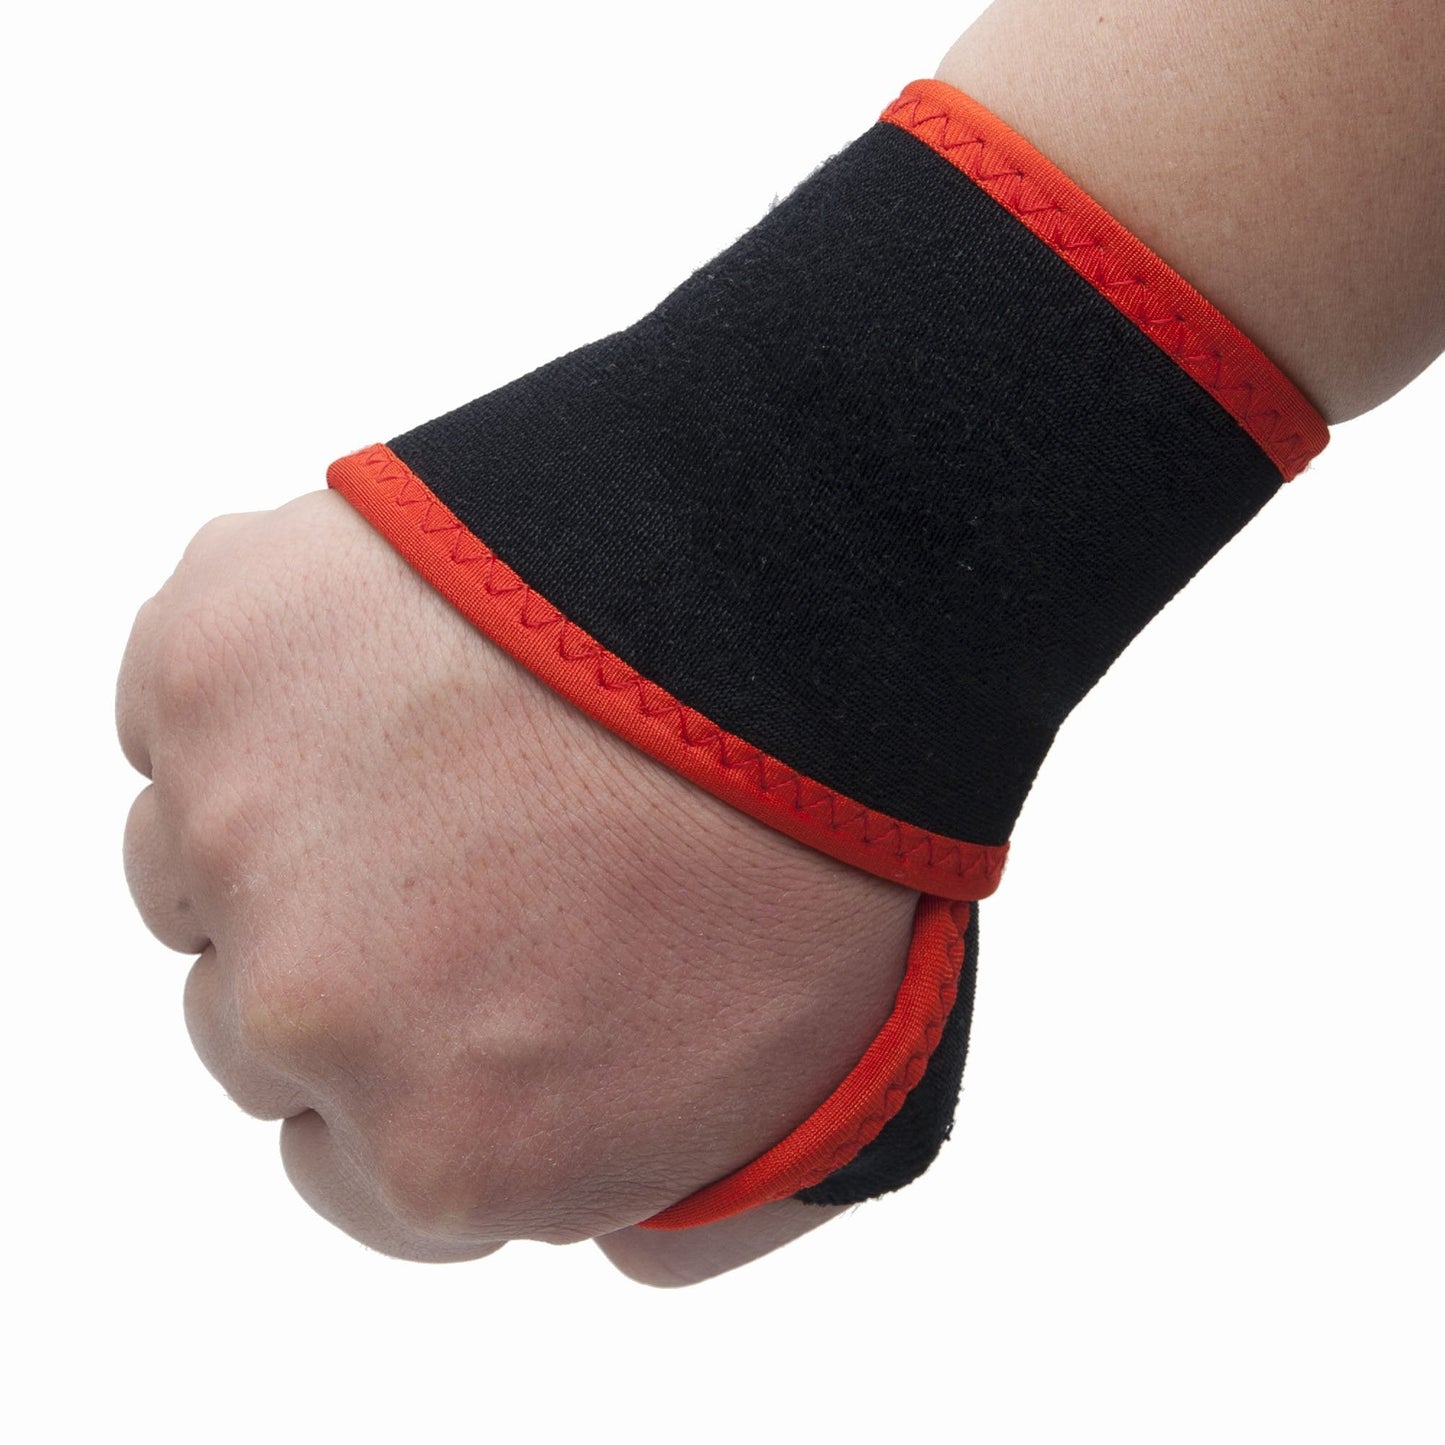 |Viavito Neoprene Wrist Support - Top|